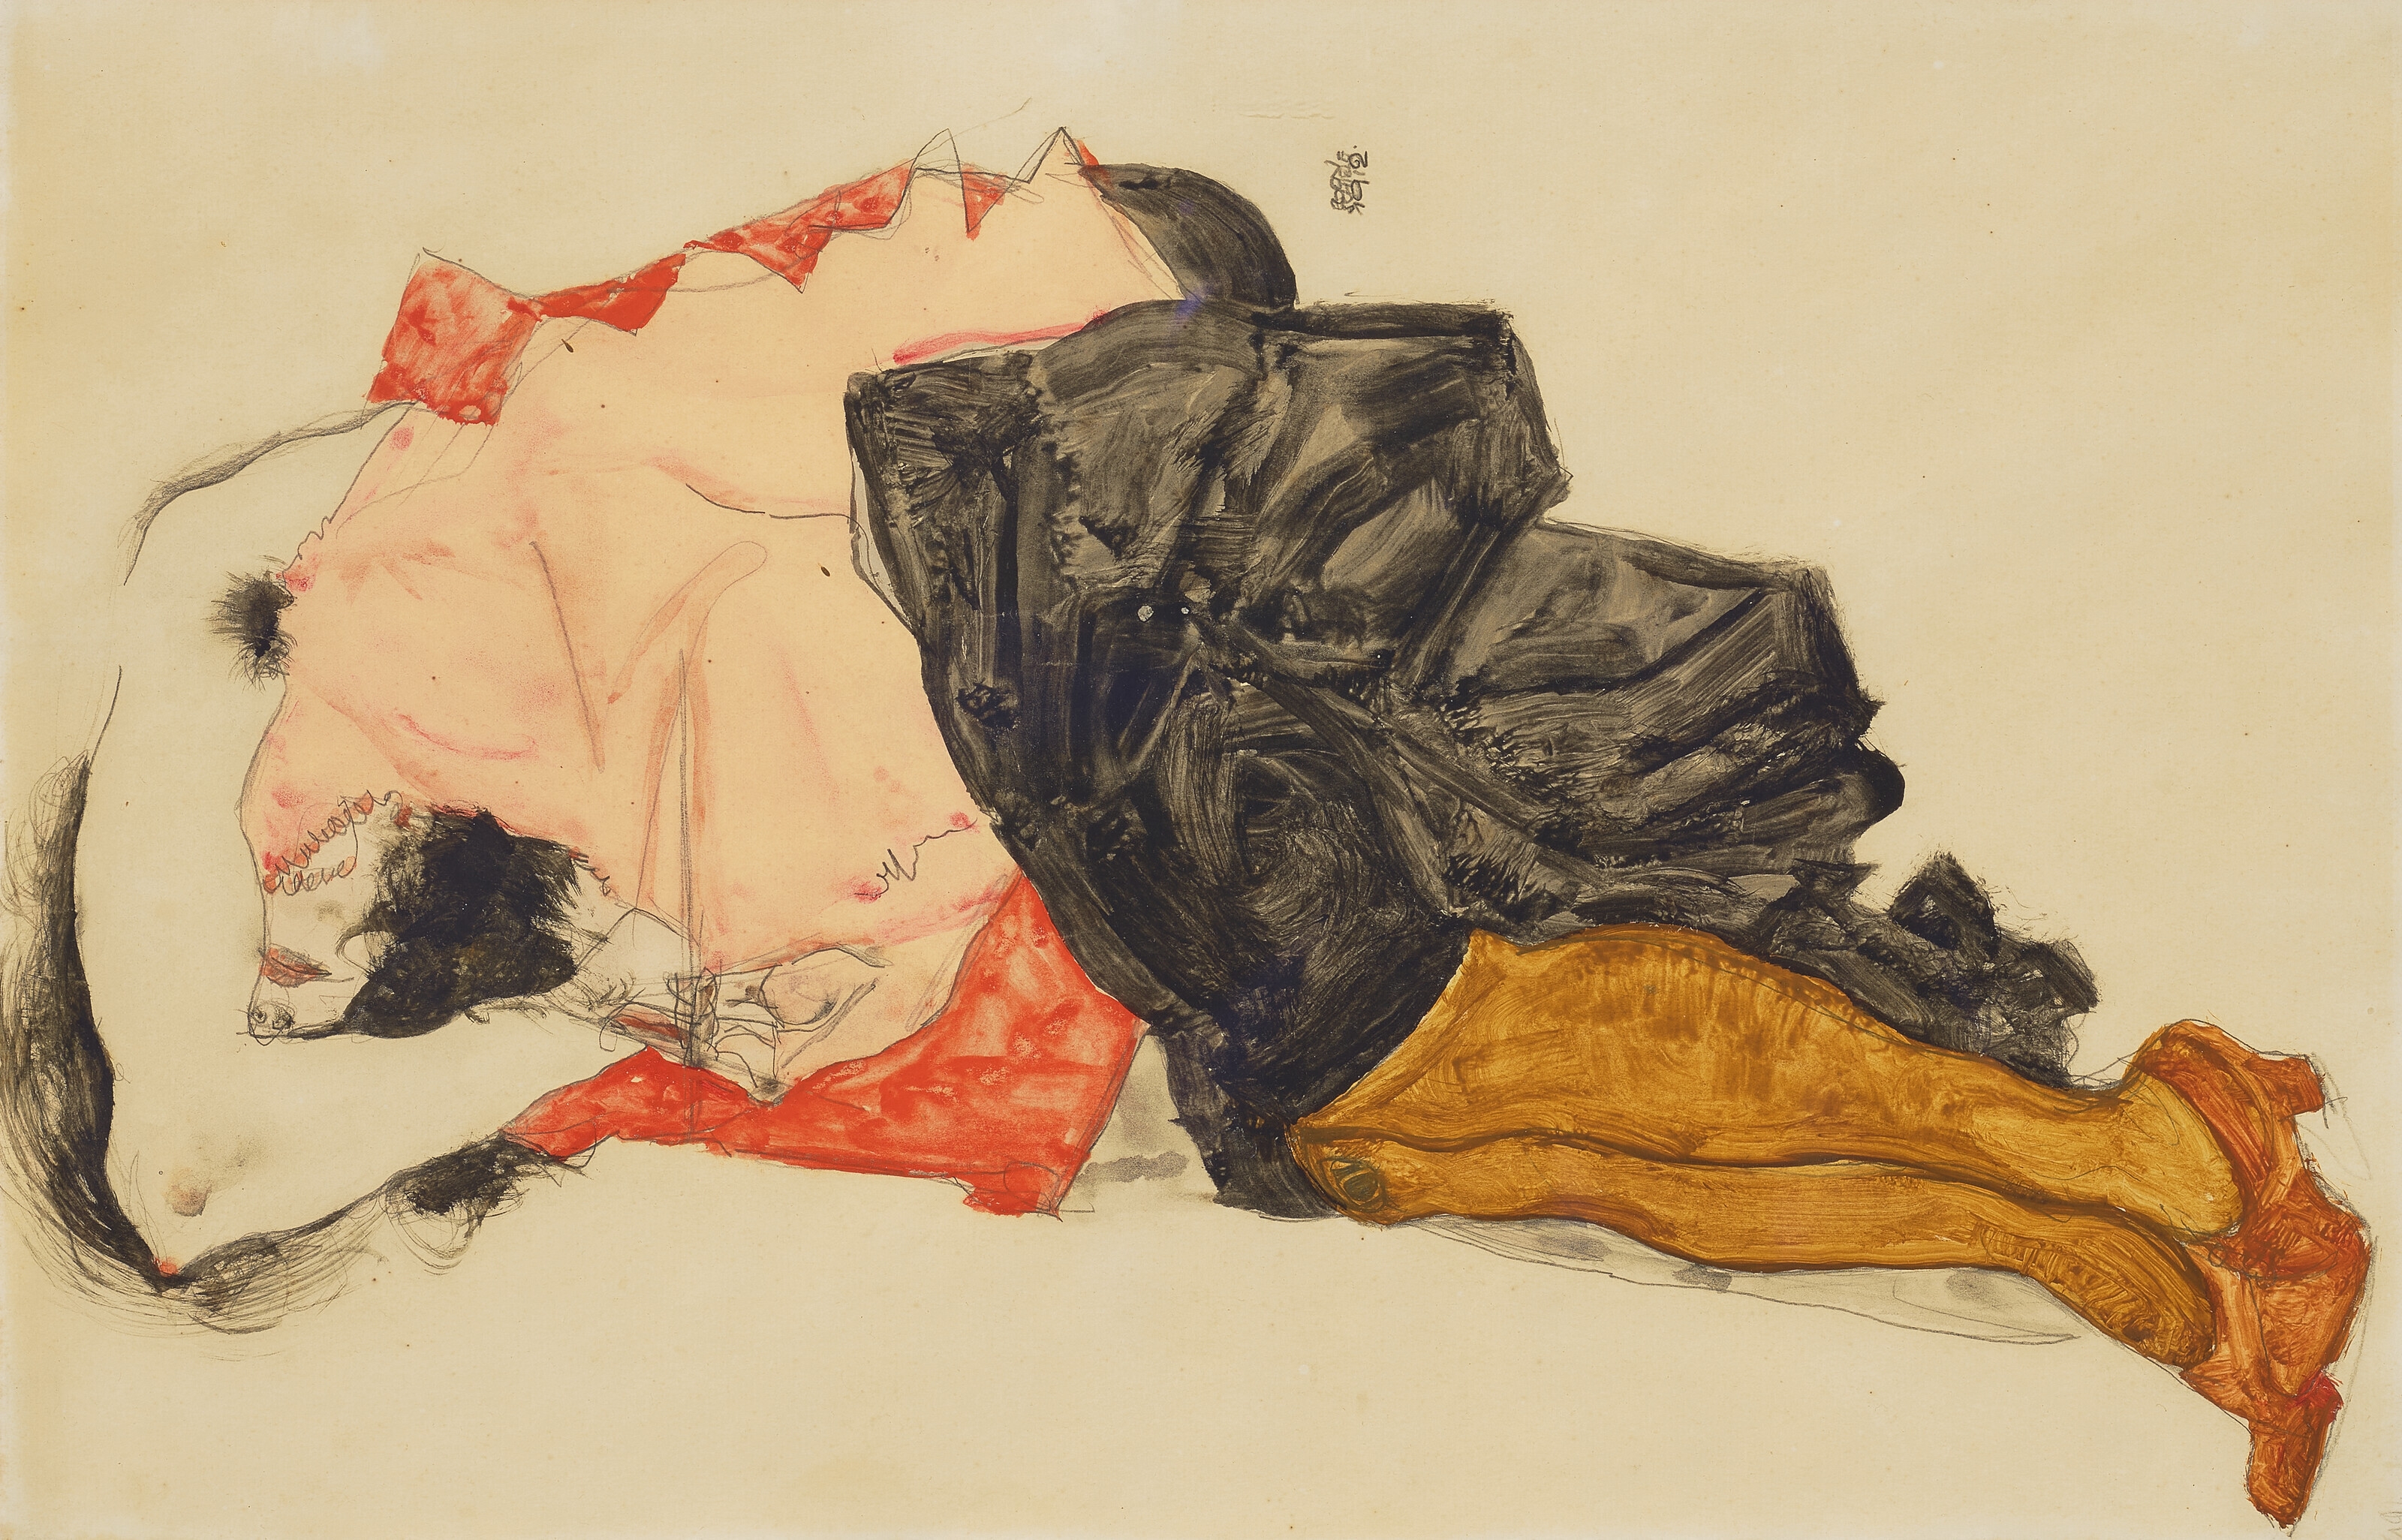 Frau, das Gesicht verbergend by Egon Schiele, 1912, Executed in 1912